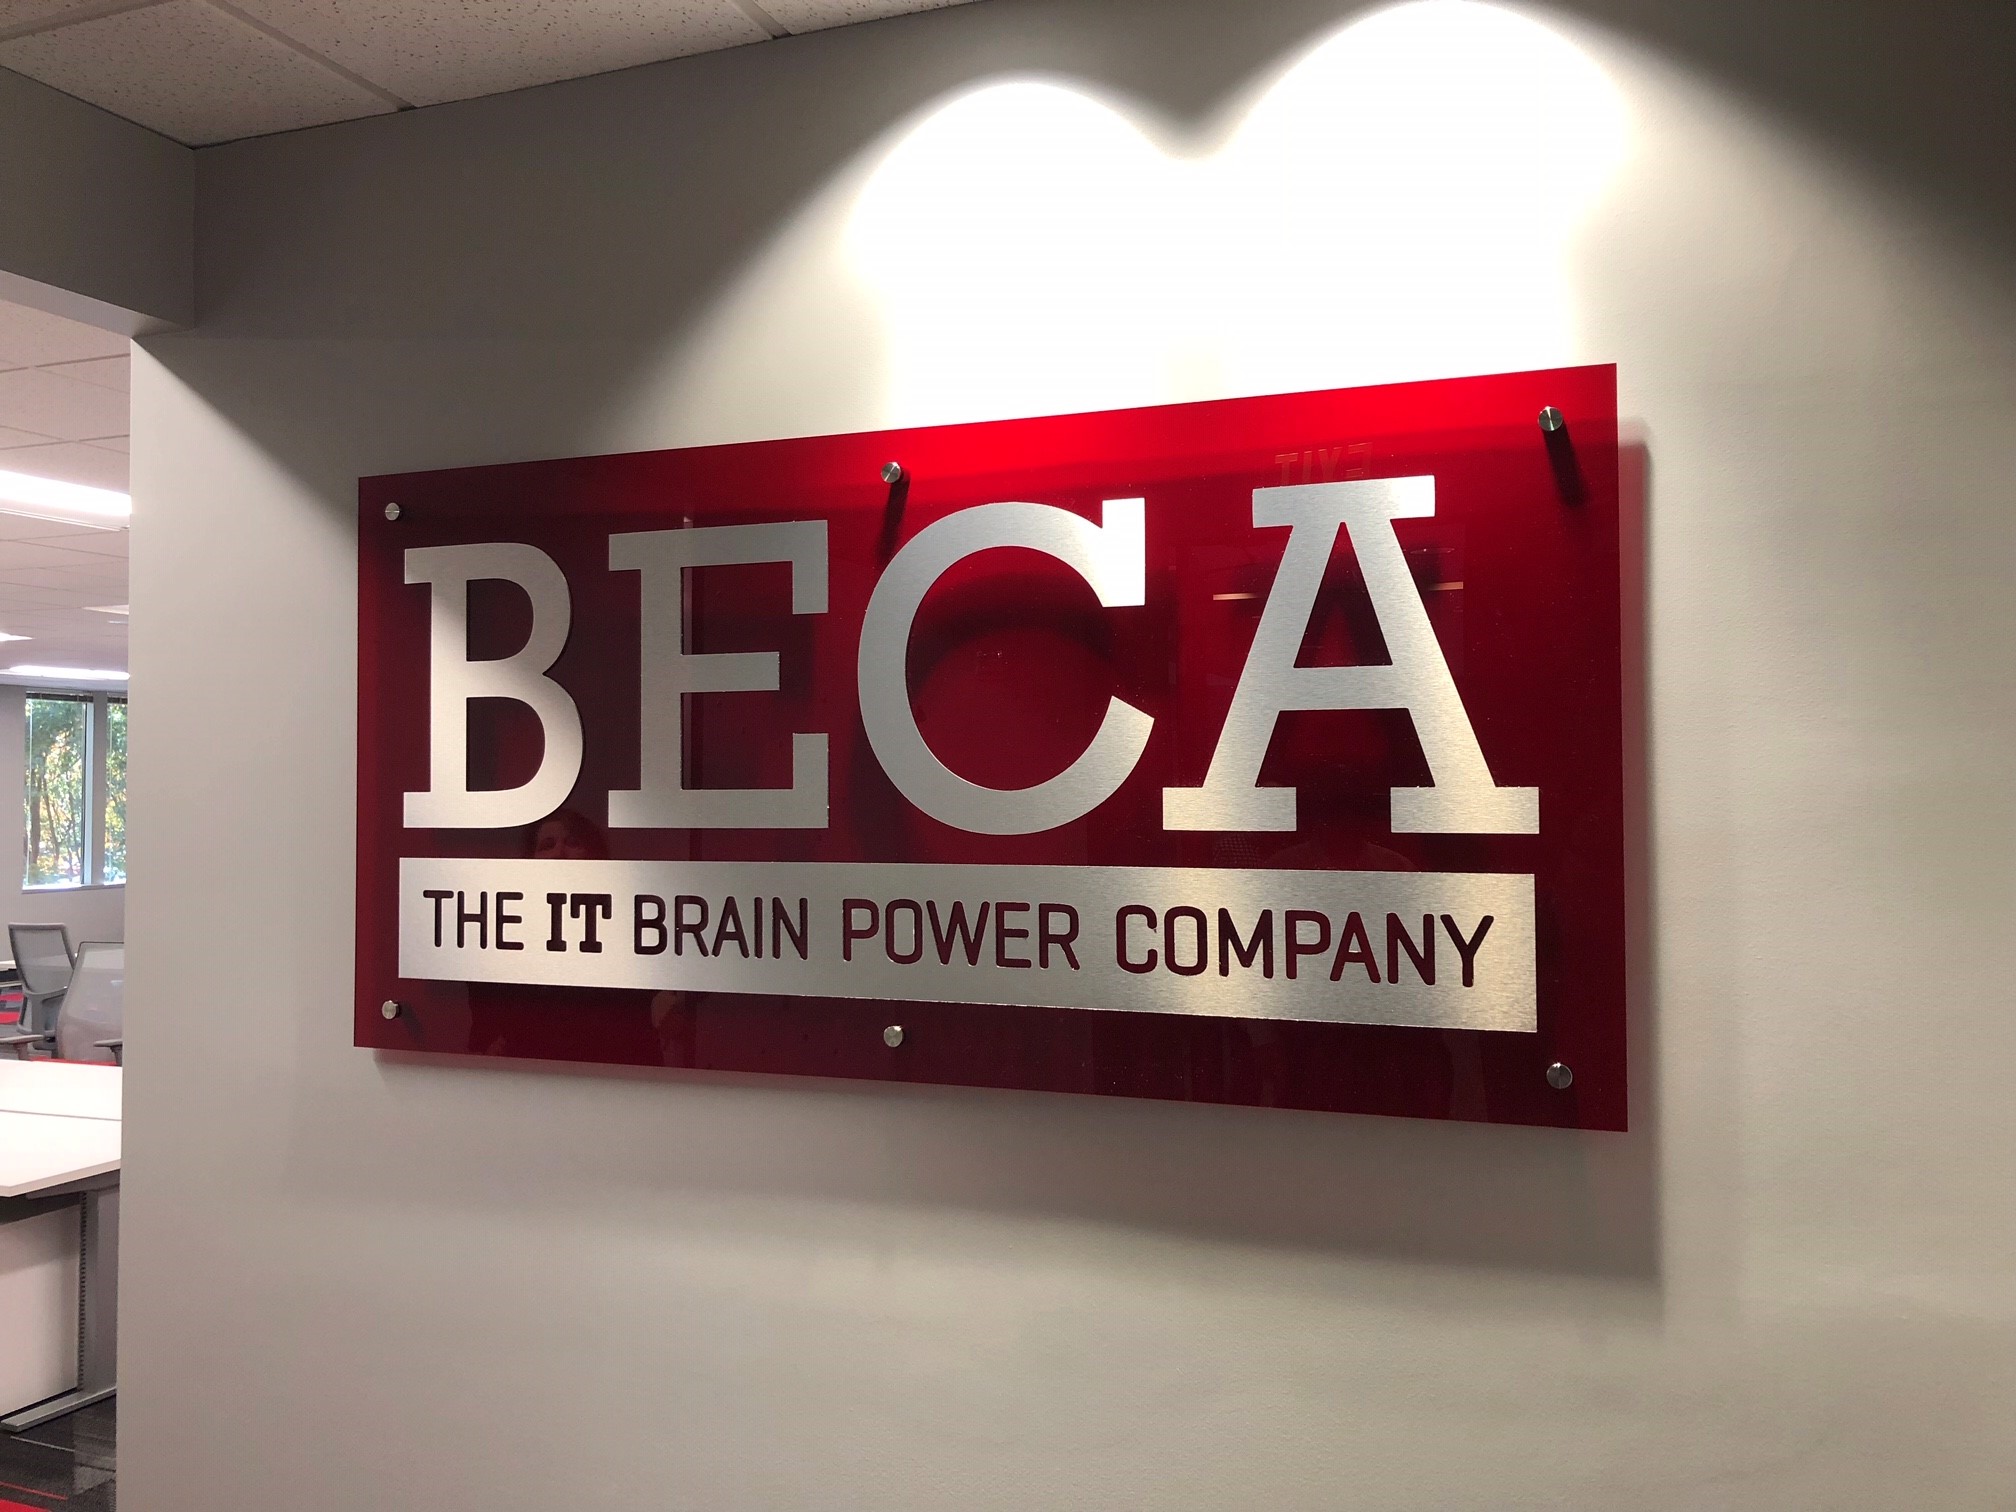 IT brain power company sign